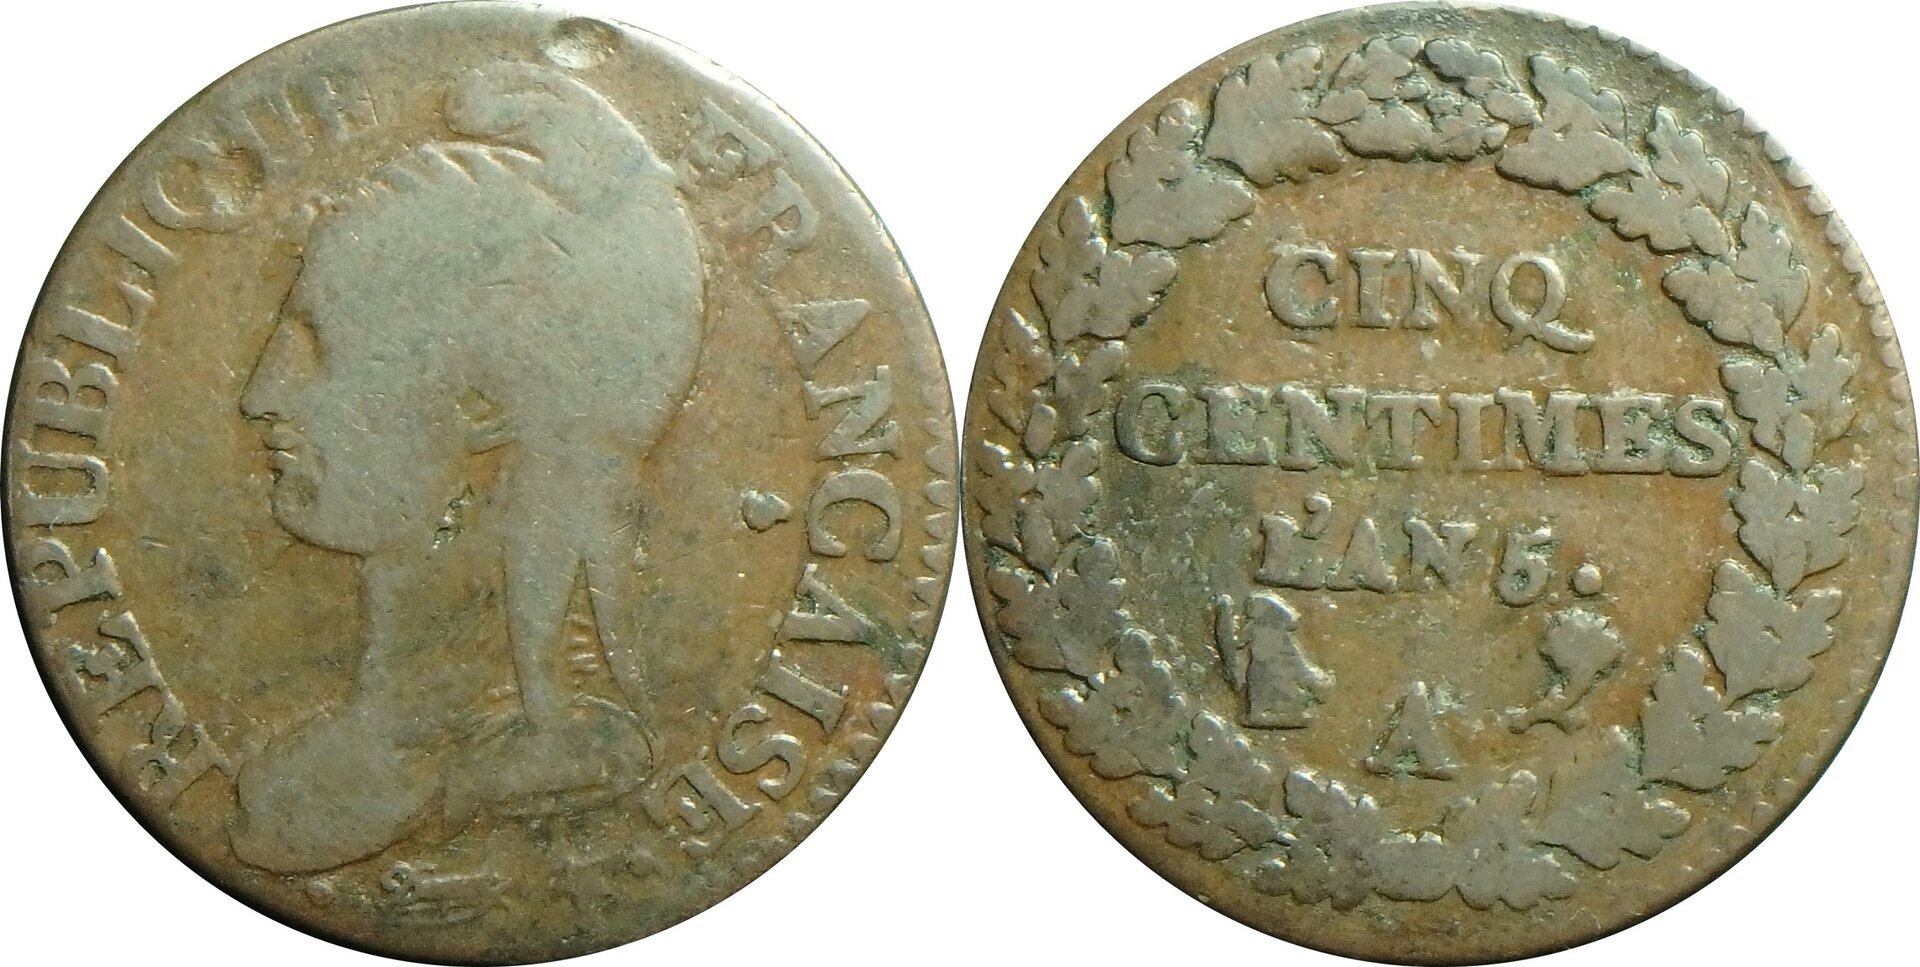 1796 A FR 5 c.jpg